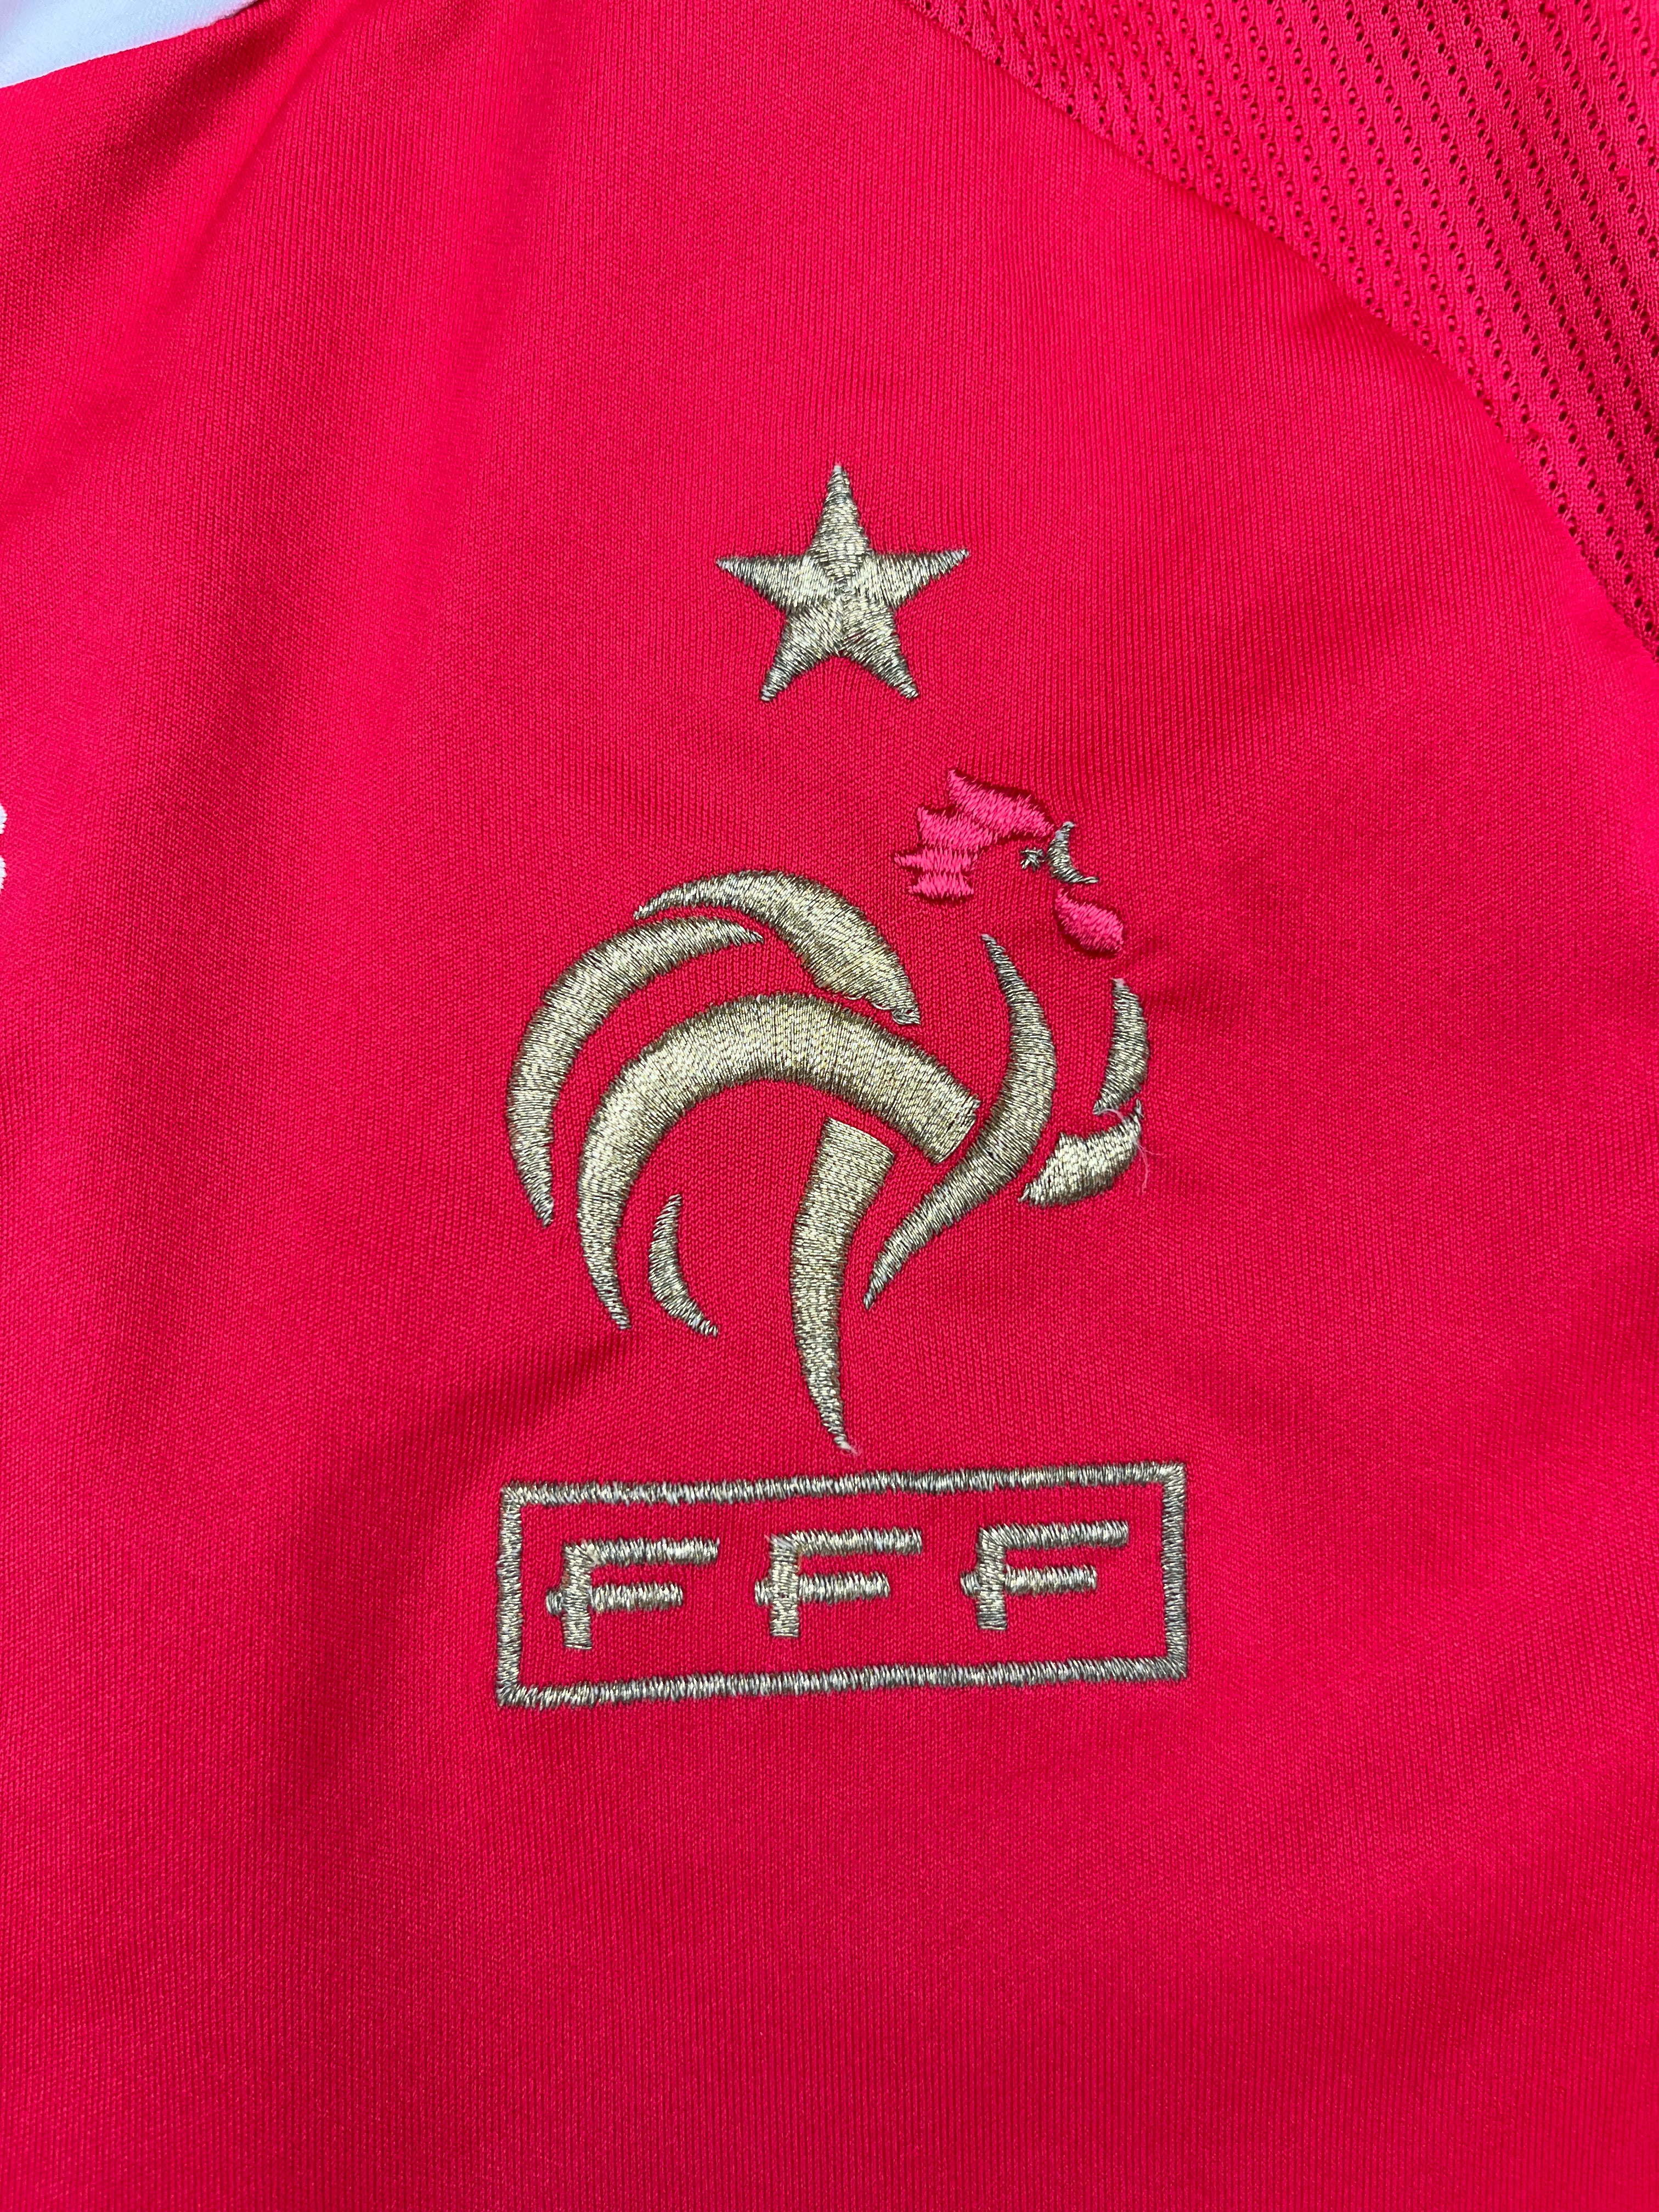 2007/08 France Away Shirt (M) 9/10